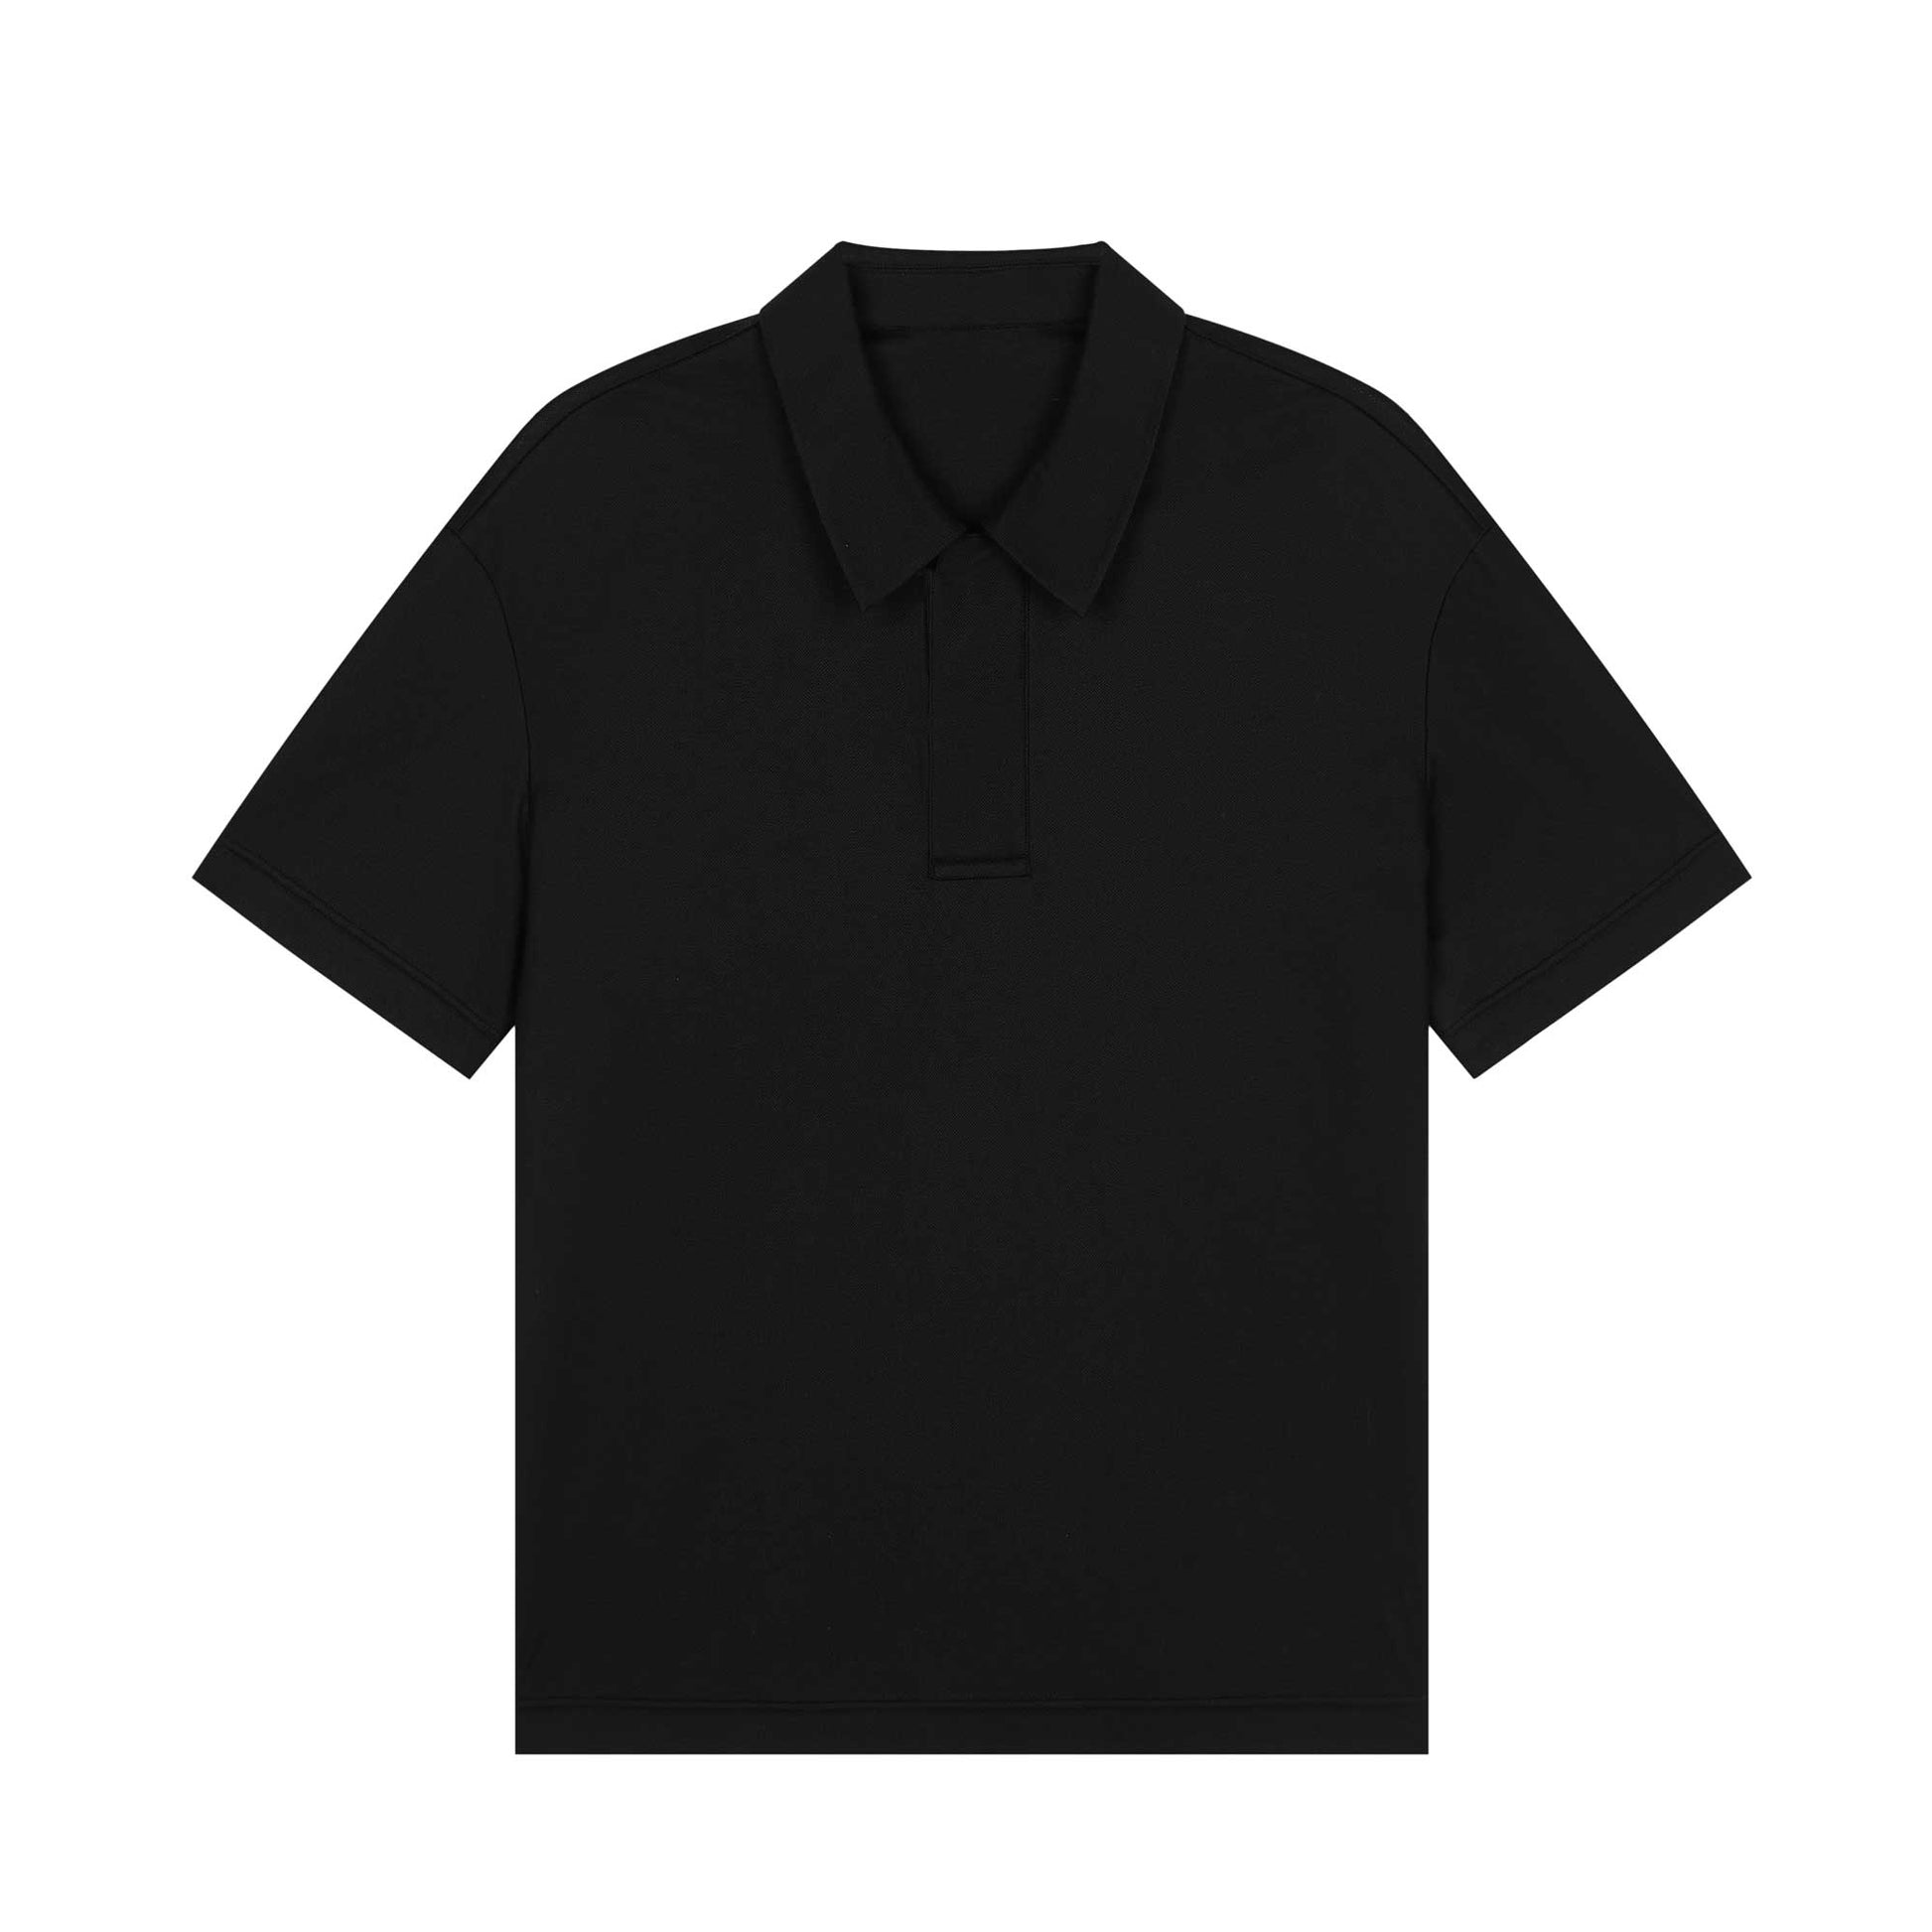 black polo shirt